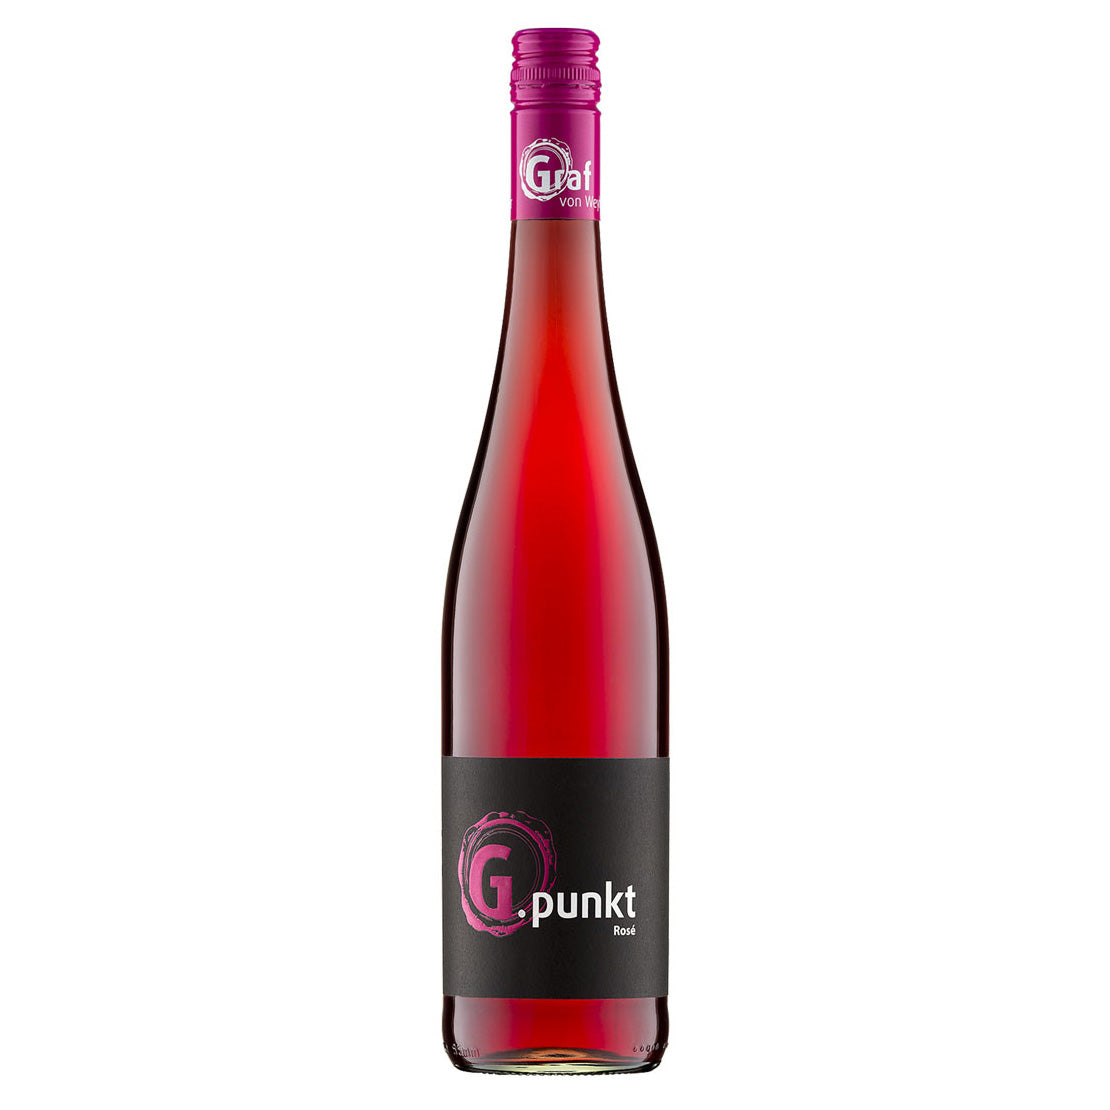 2021 G.point Rosé dry